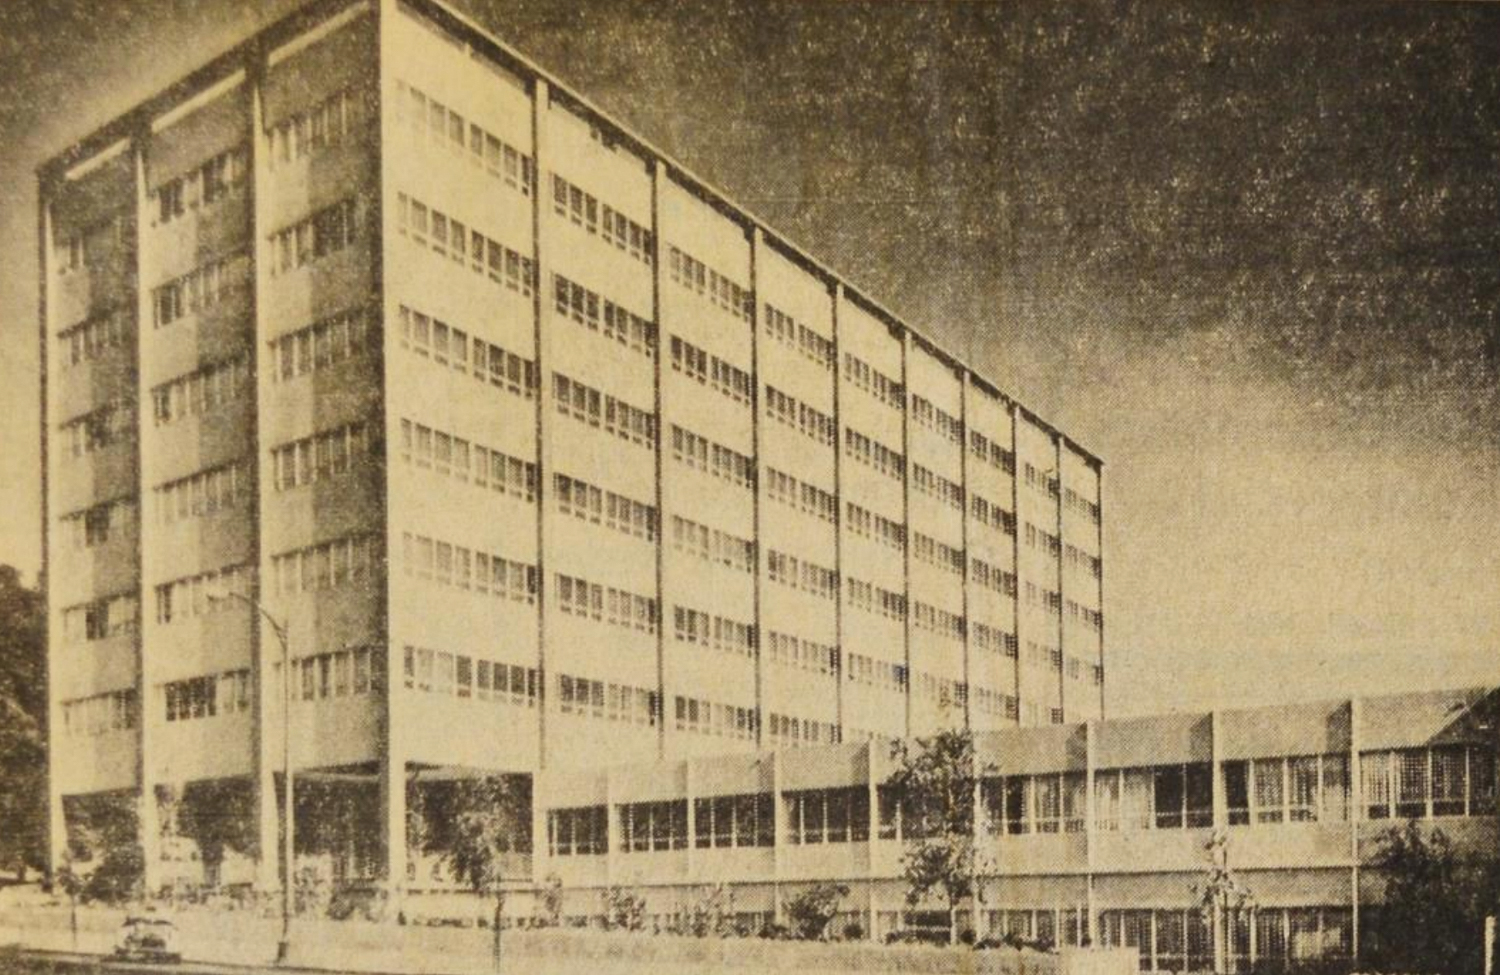 University Hall photographed in 1959, image by Davis Enterprises courtesy DEIR